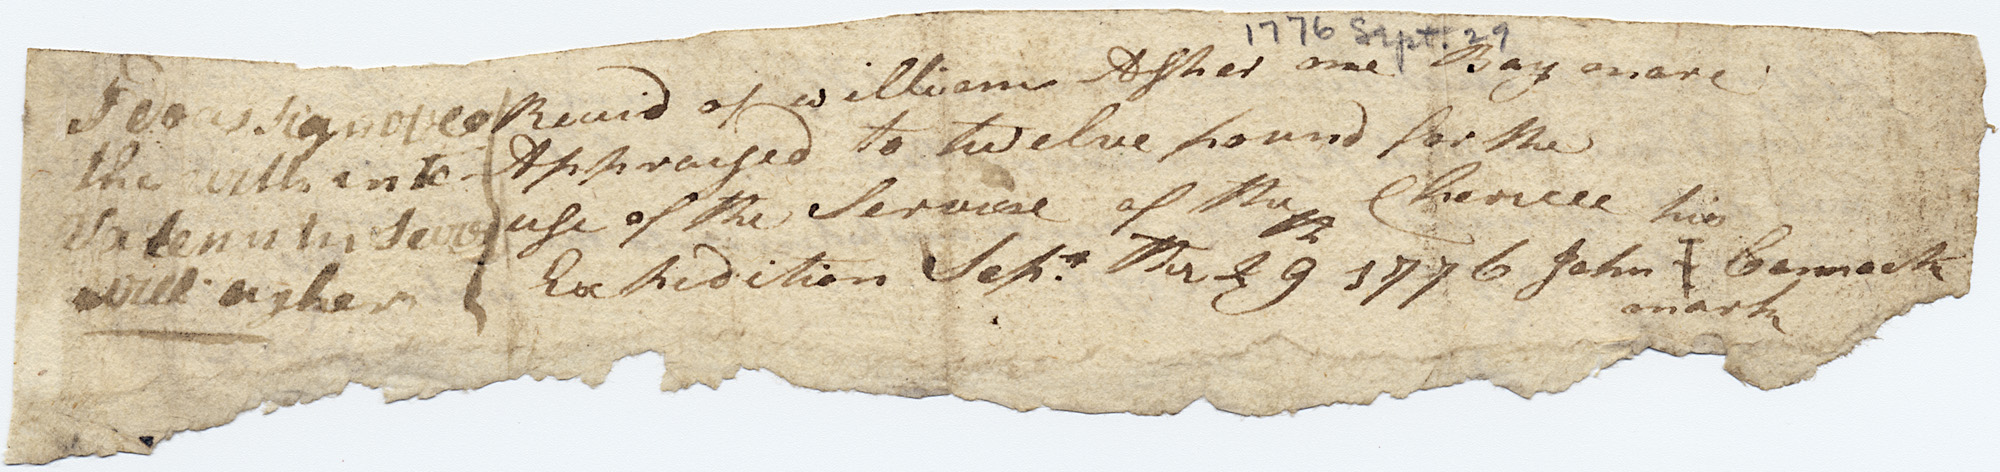 1776 horse receipt and appraisal